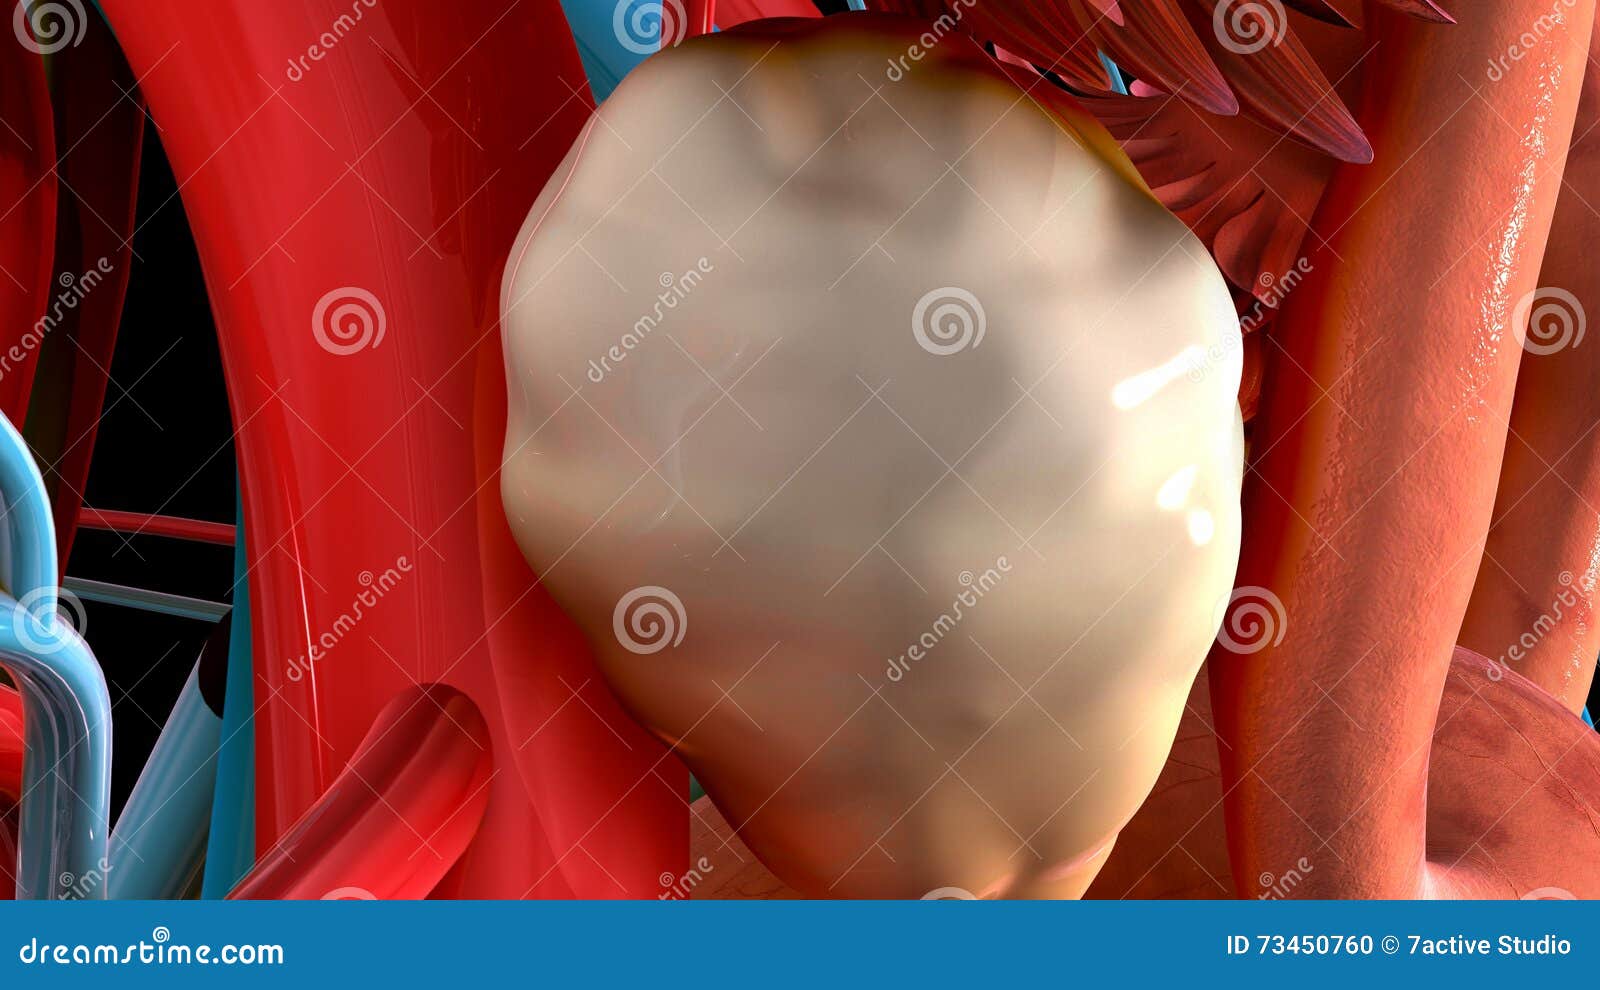 female ovary